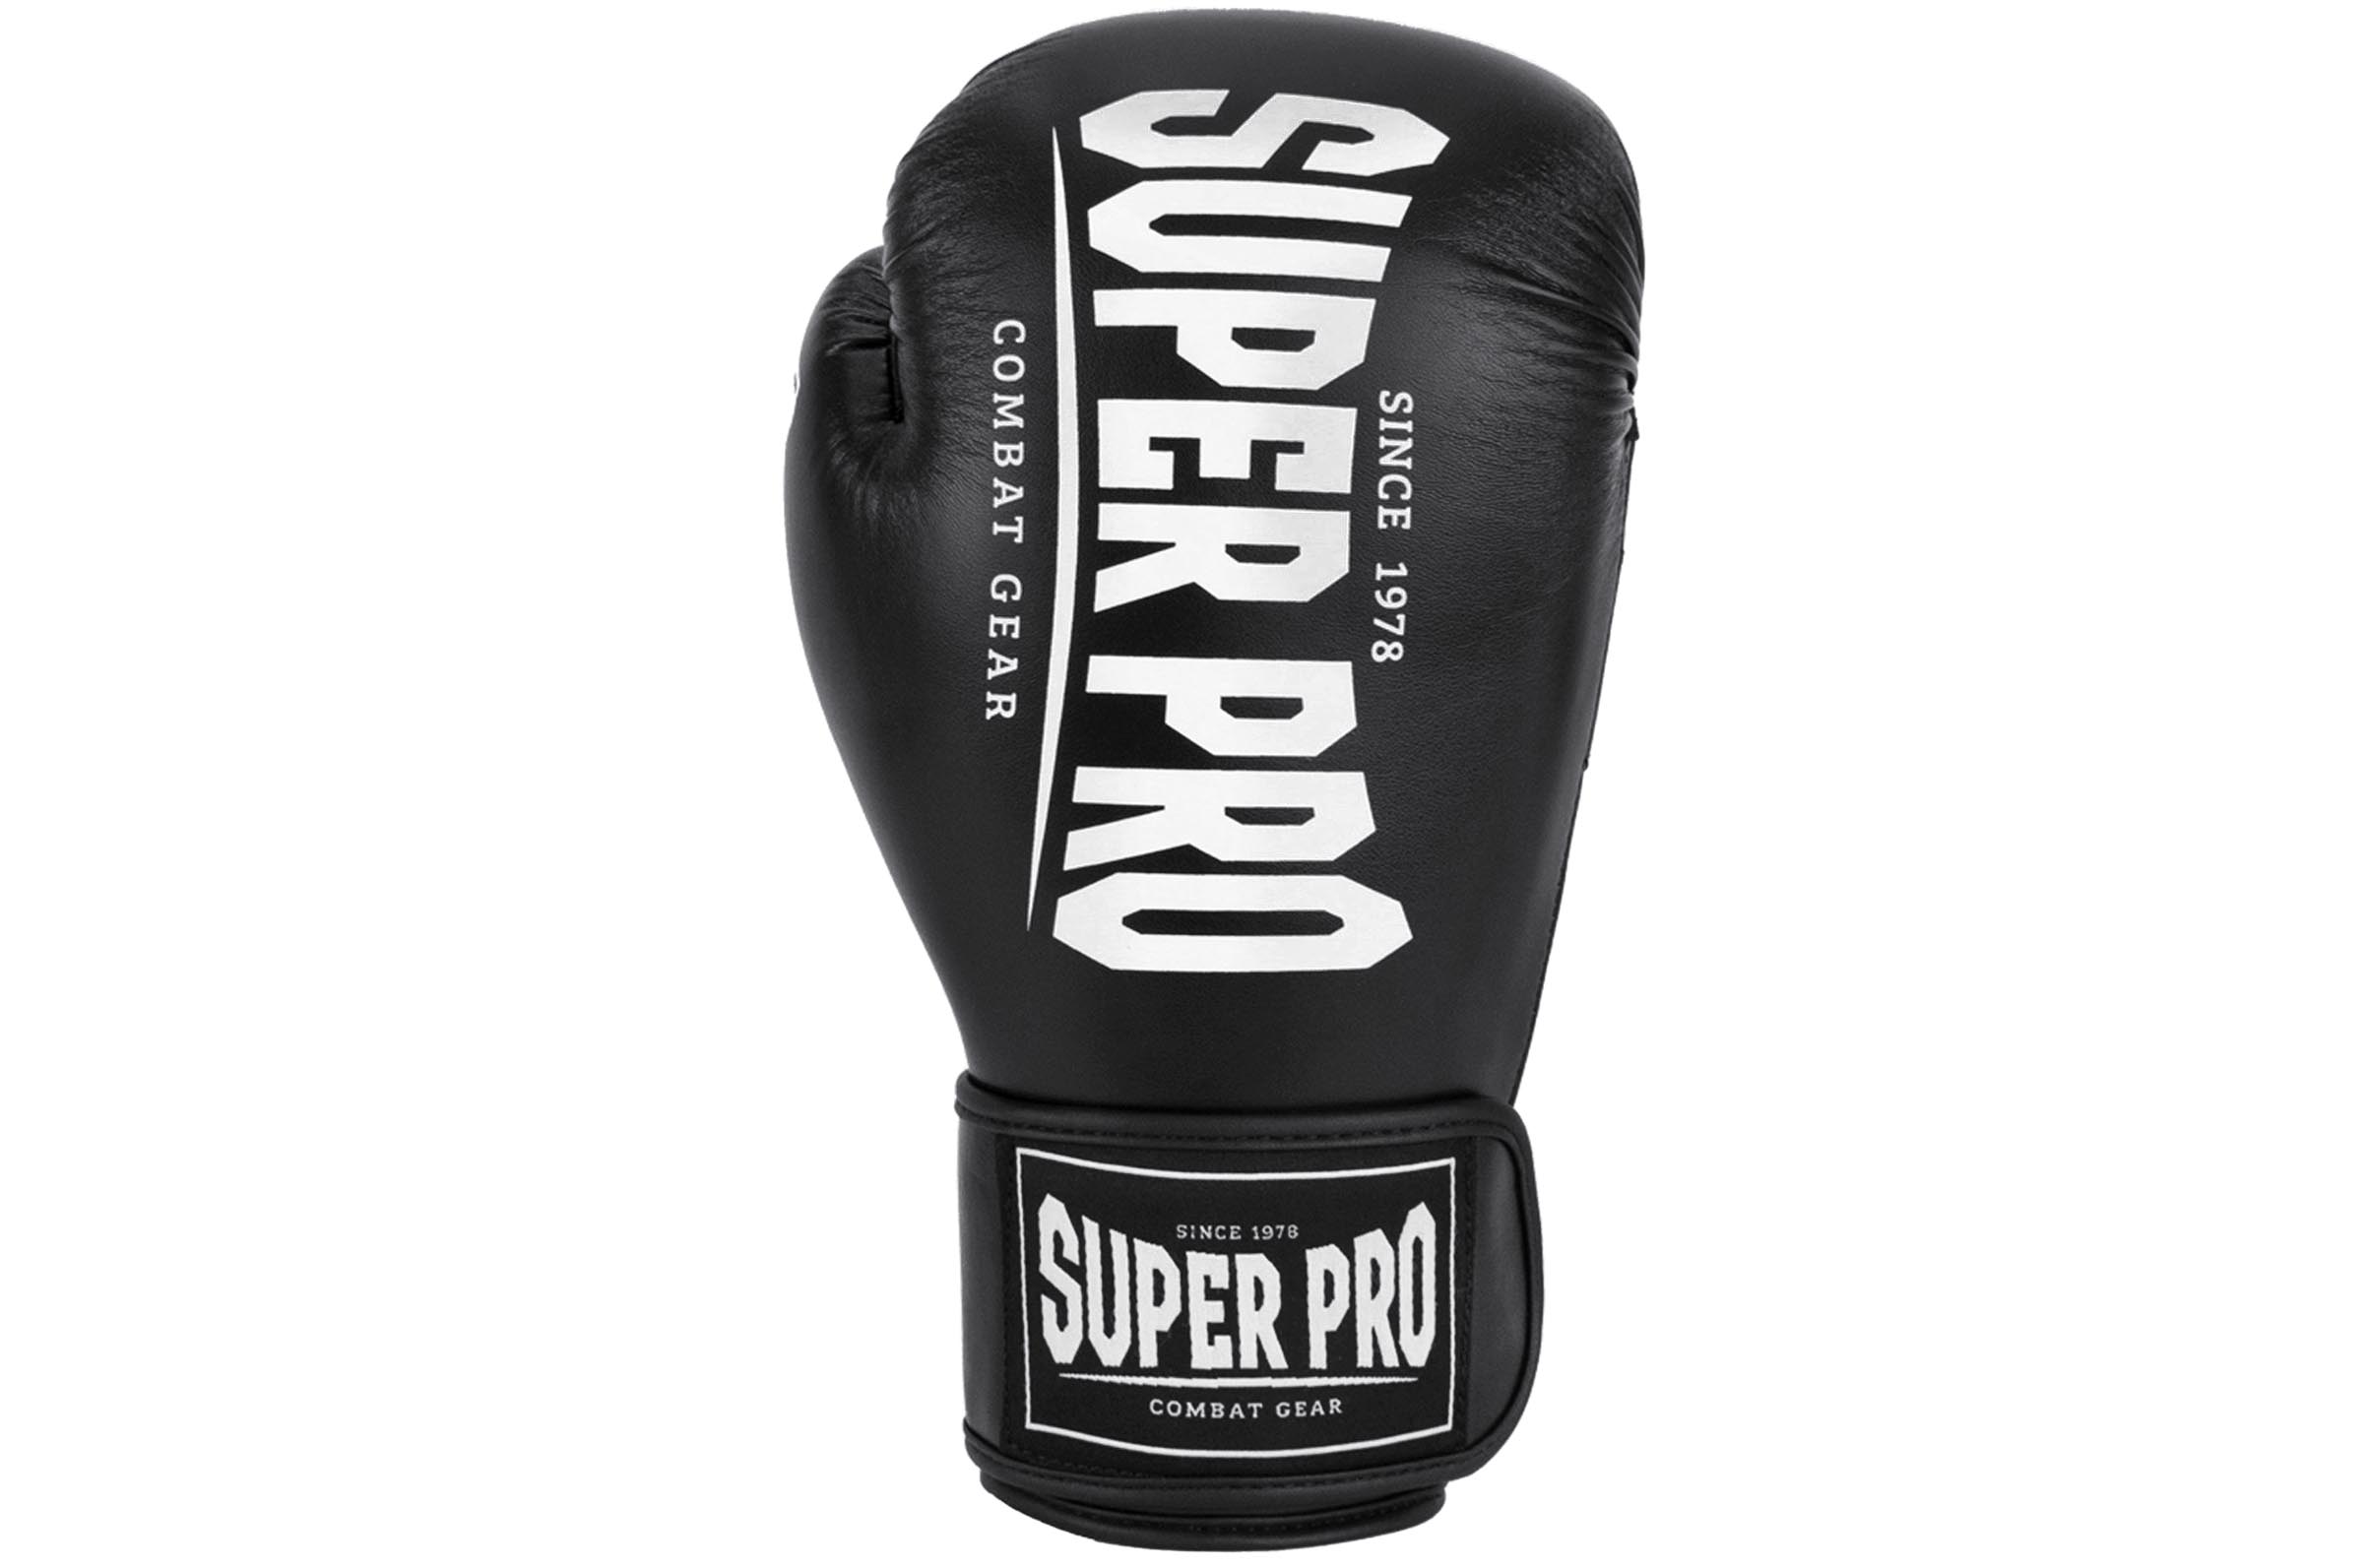 Bolsa Saco Pared Uppercut Profesional+guantes Boxeo Everlast - $ 226.383,14